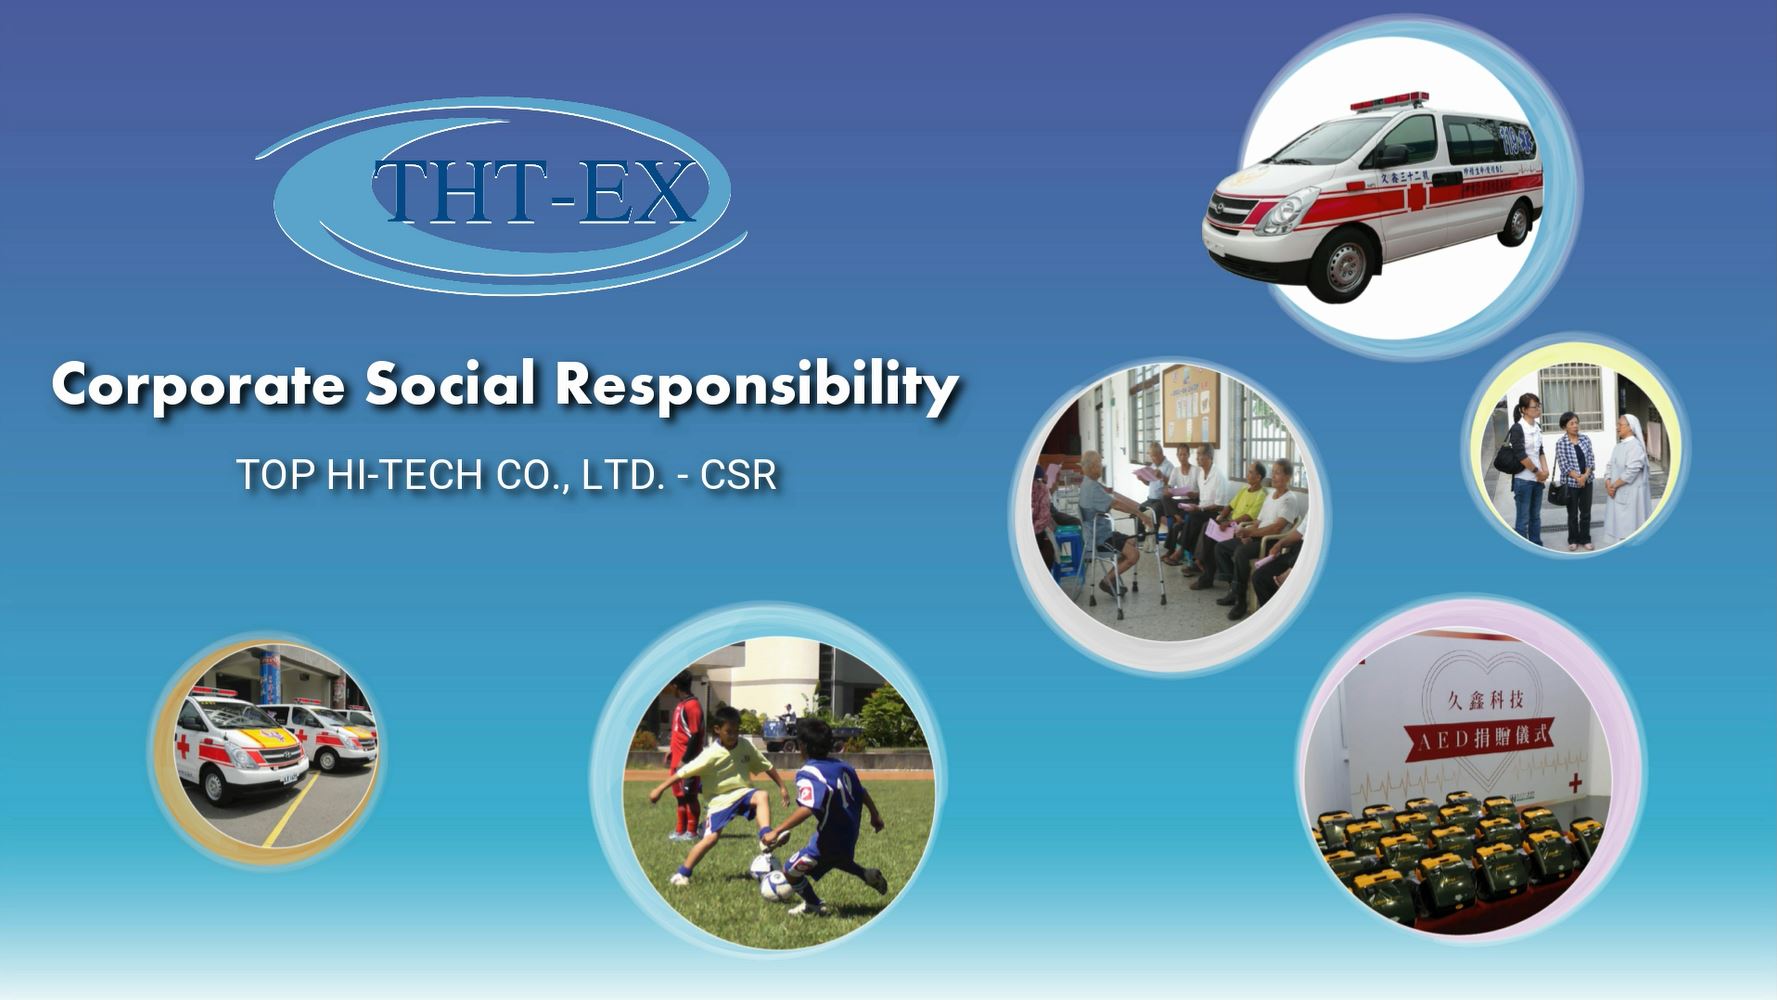  【Video】THT-EX Corporate Social Responsibility (CSR)